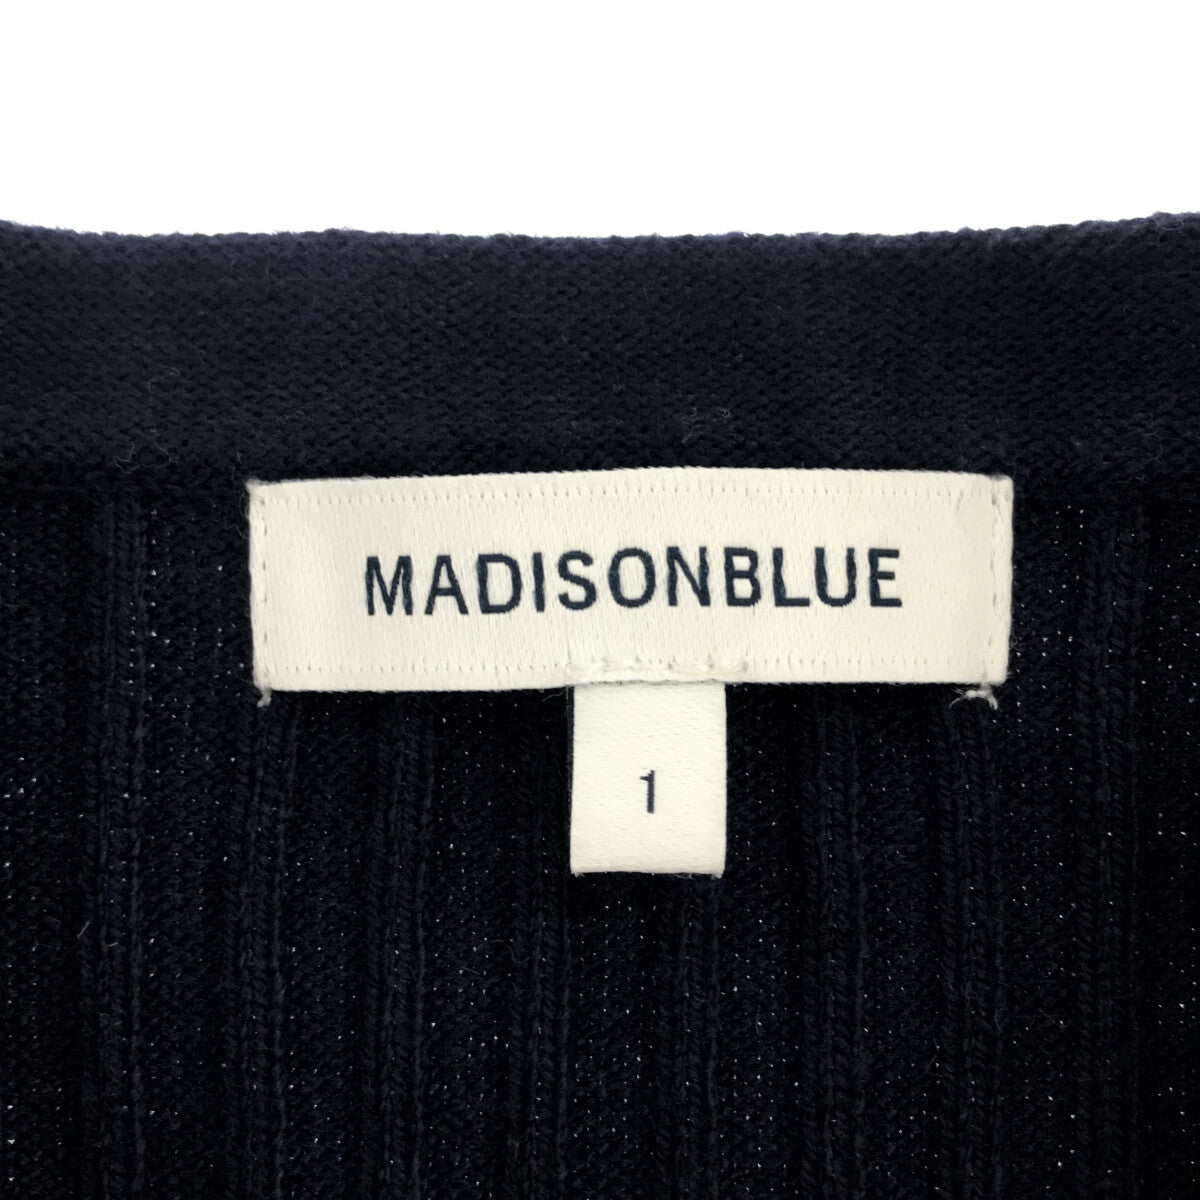 MADISON BLUE / マディソンブルー | リブ クルーネックニット | 1 | ネイビー | レディース